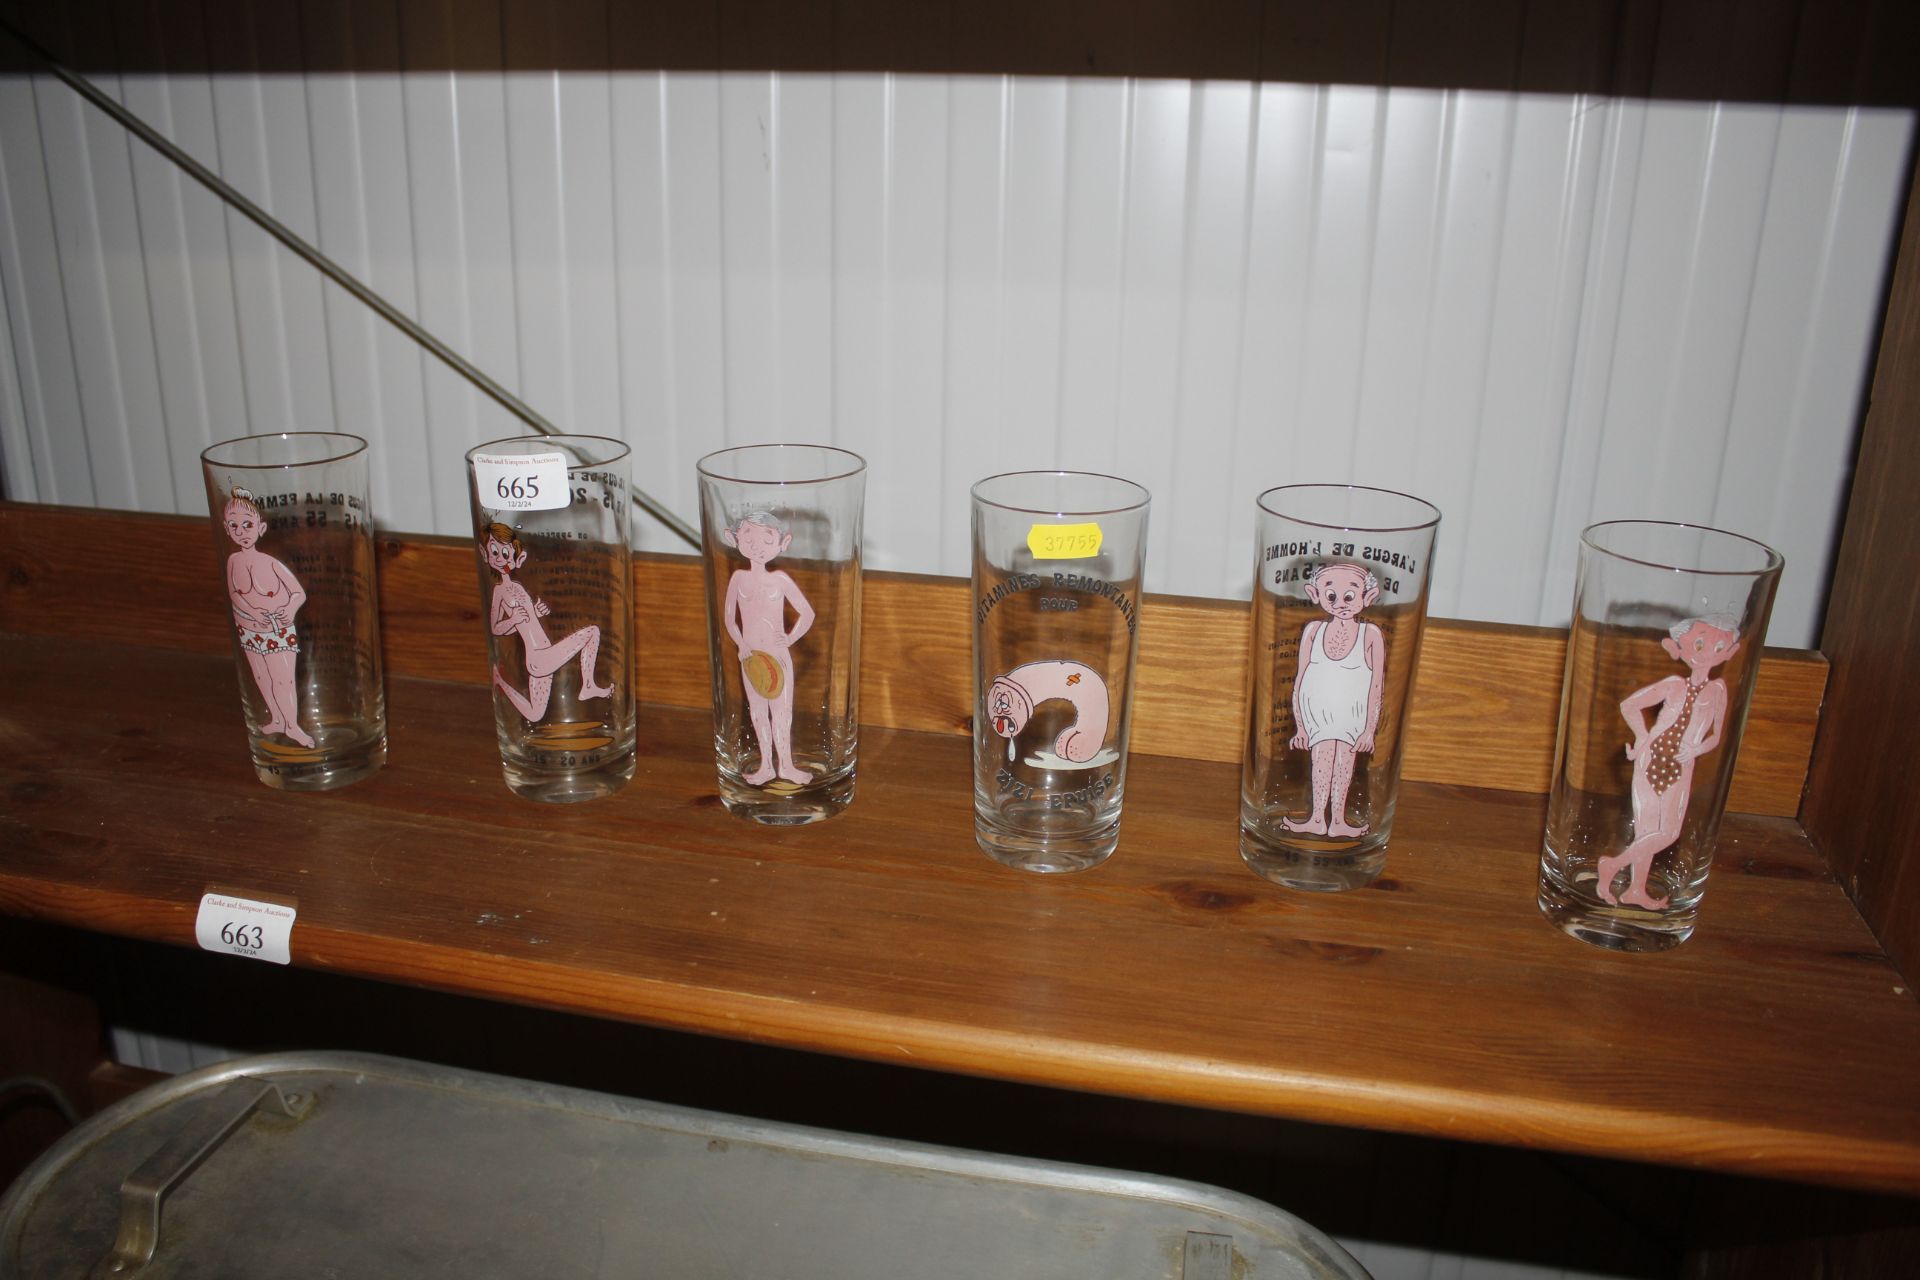 Six humorous cocktail glasses